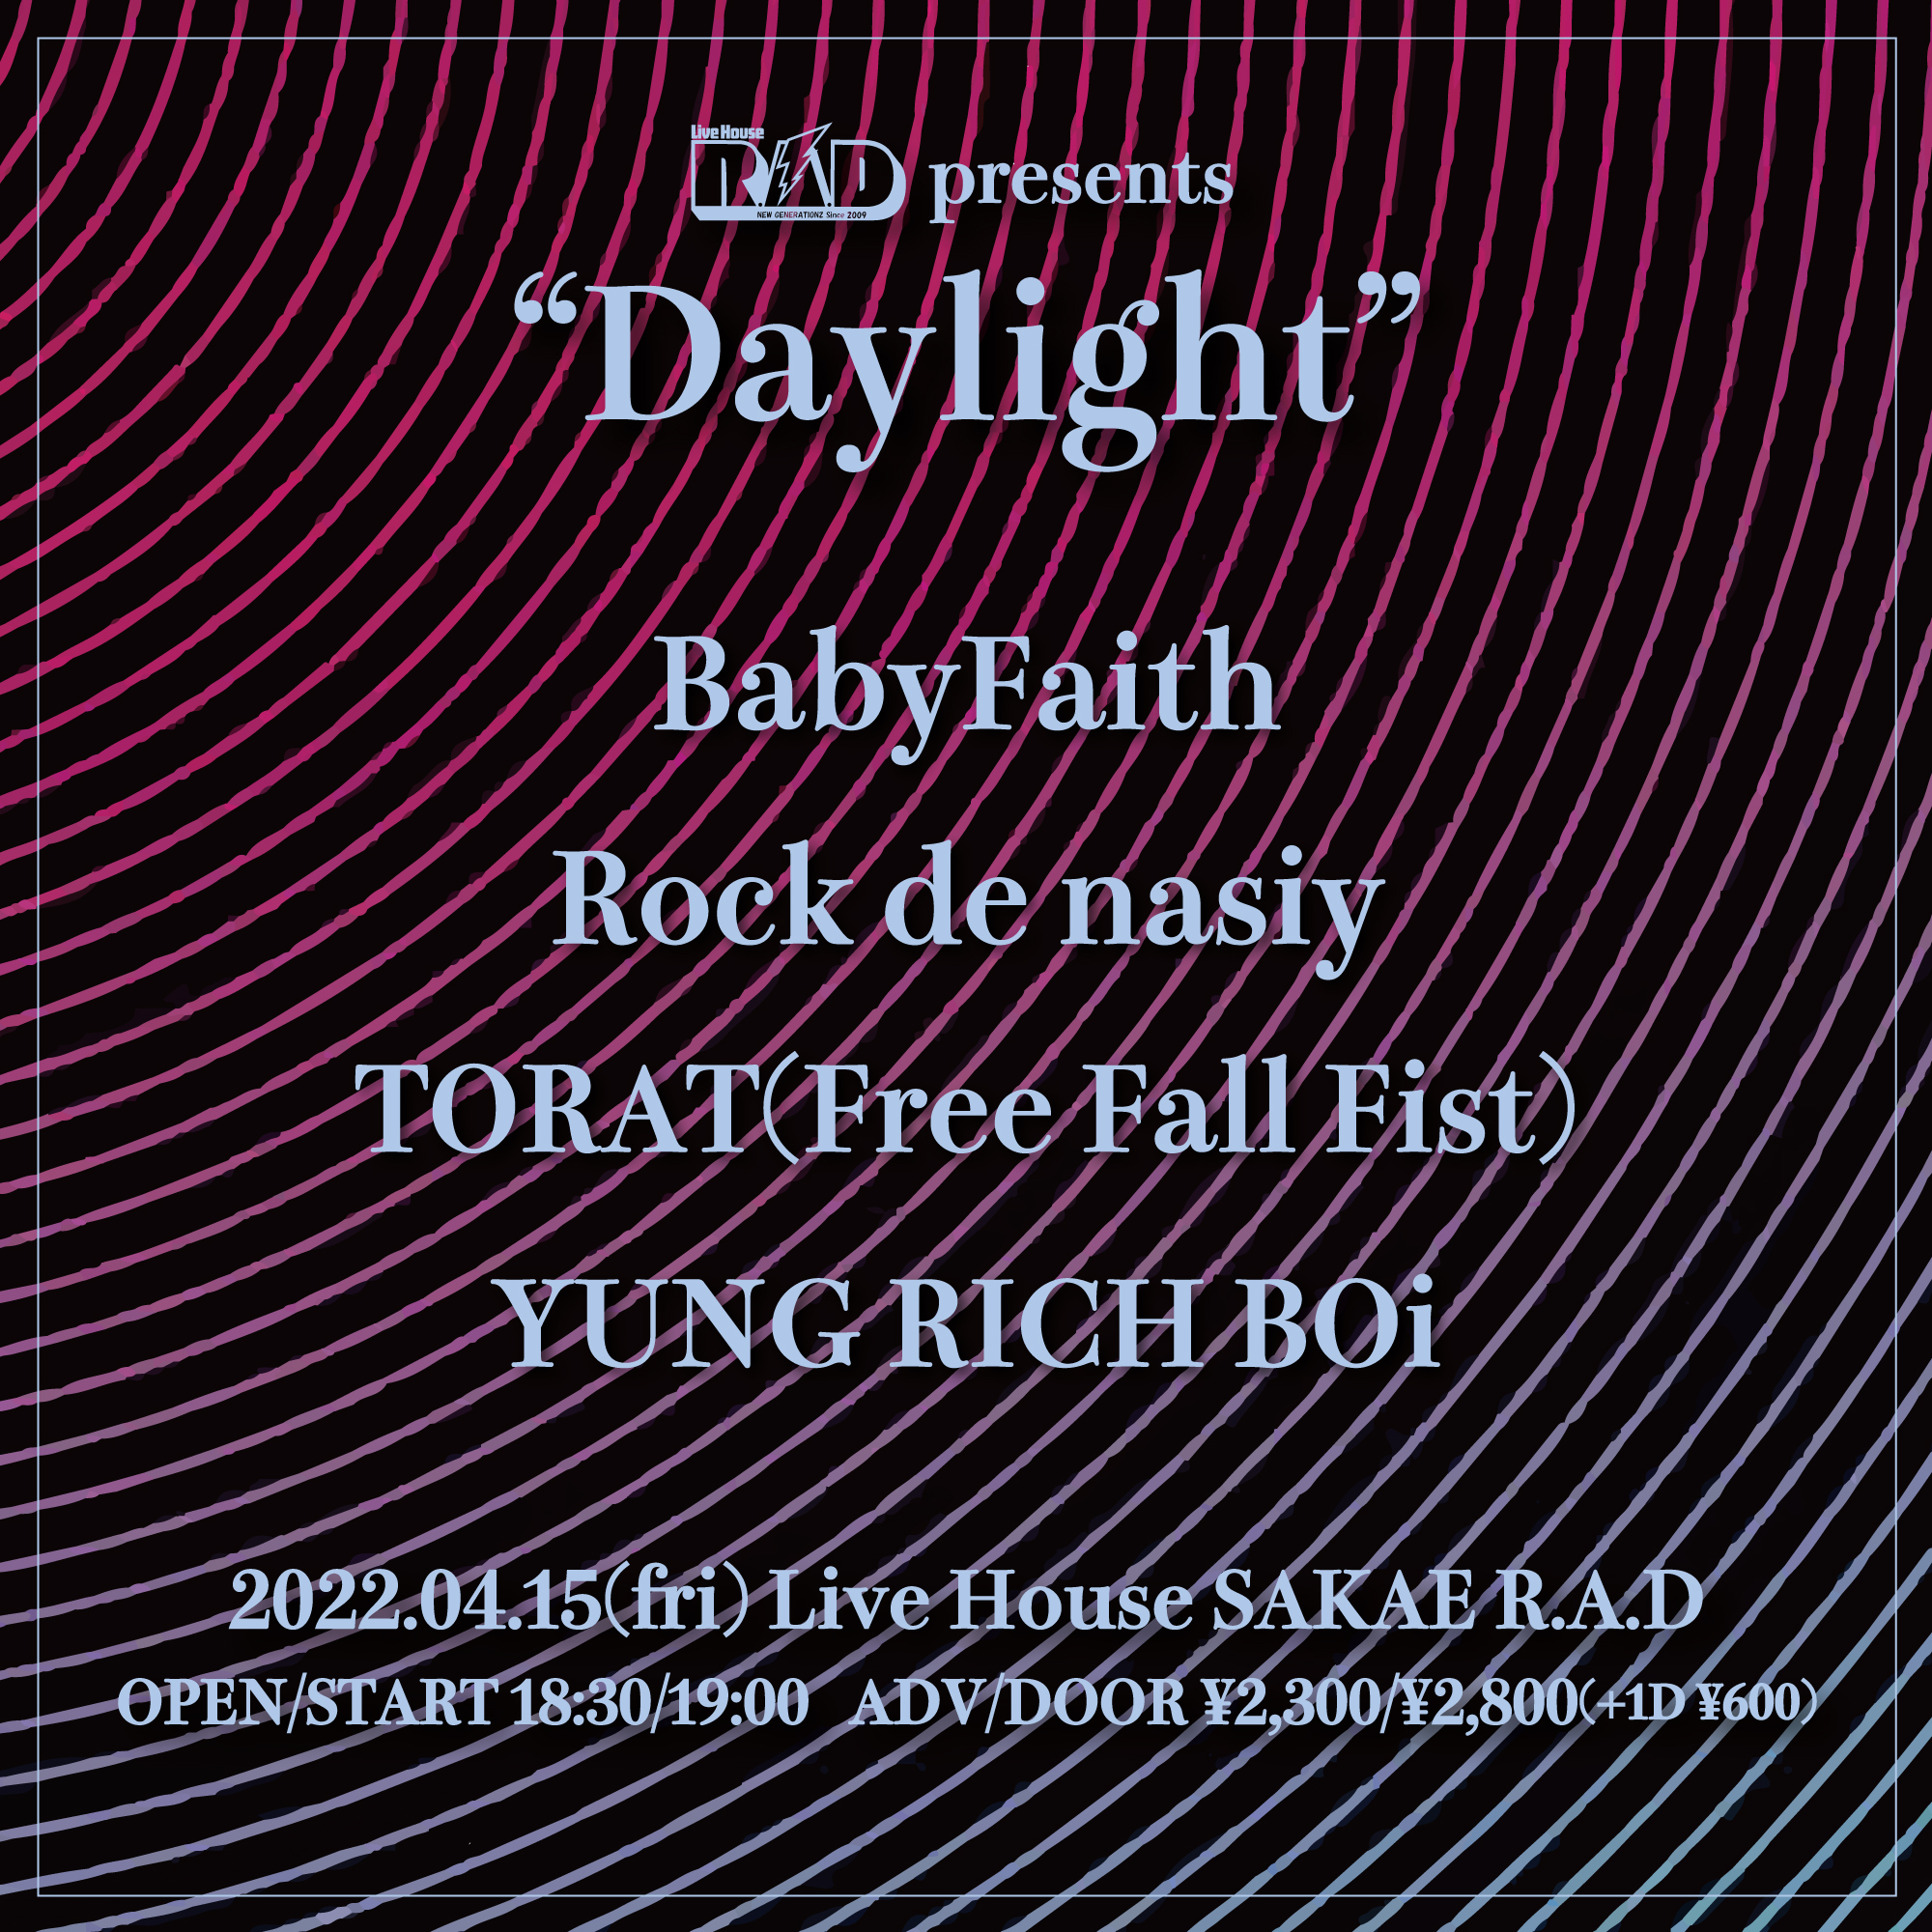 R.A.D presents "Daylight"